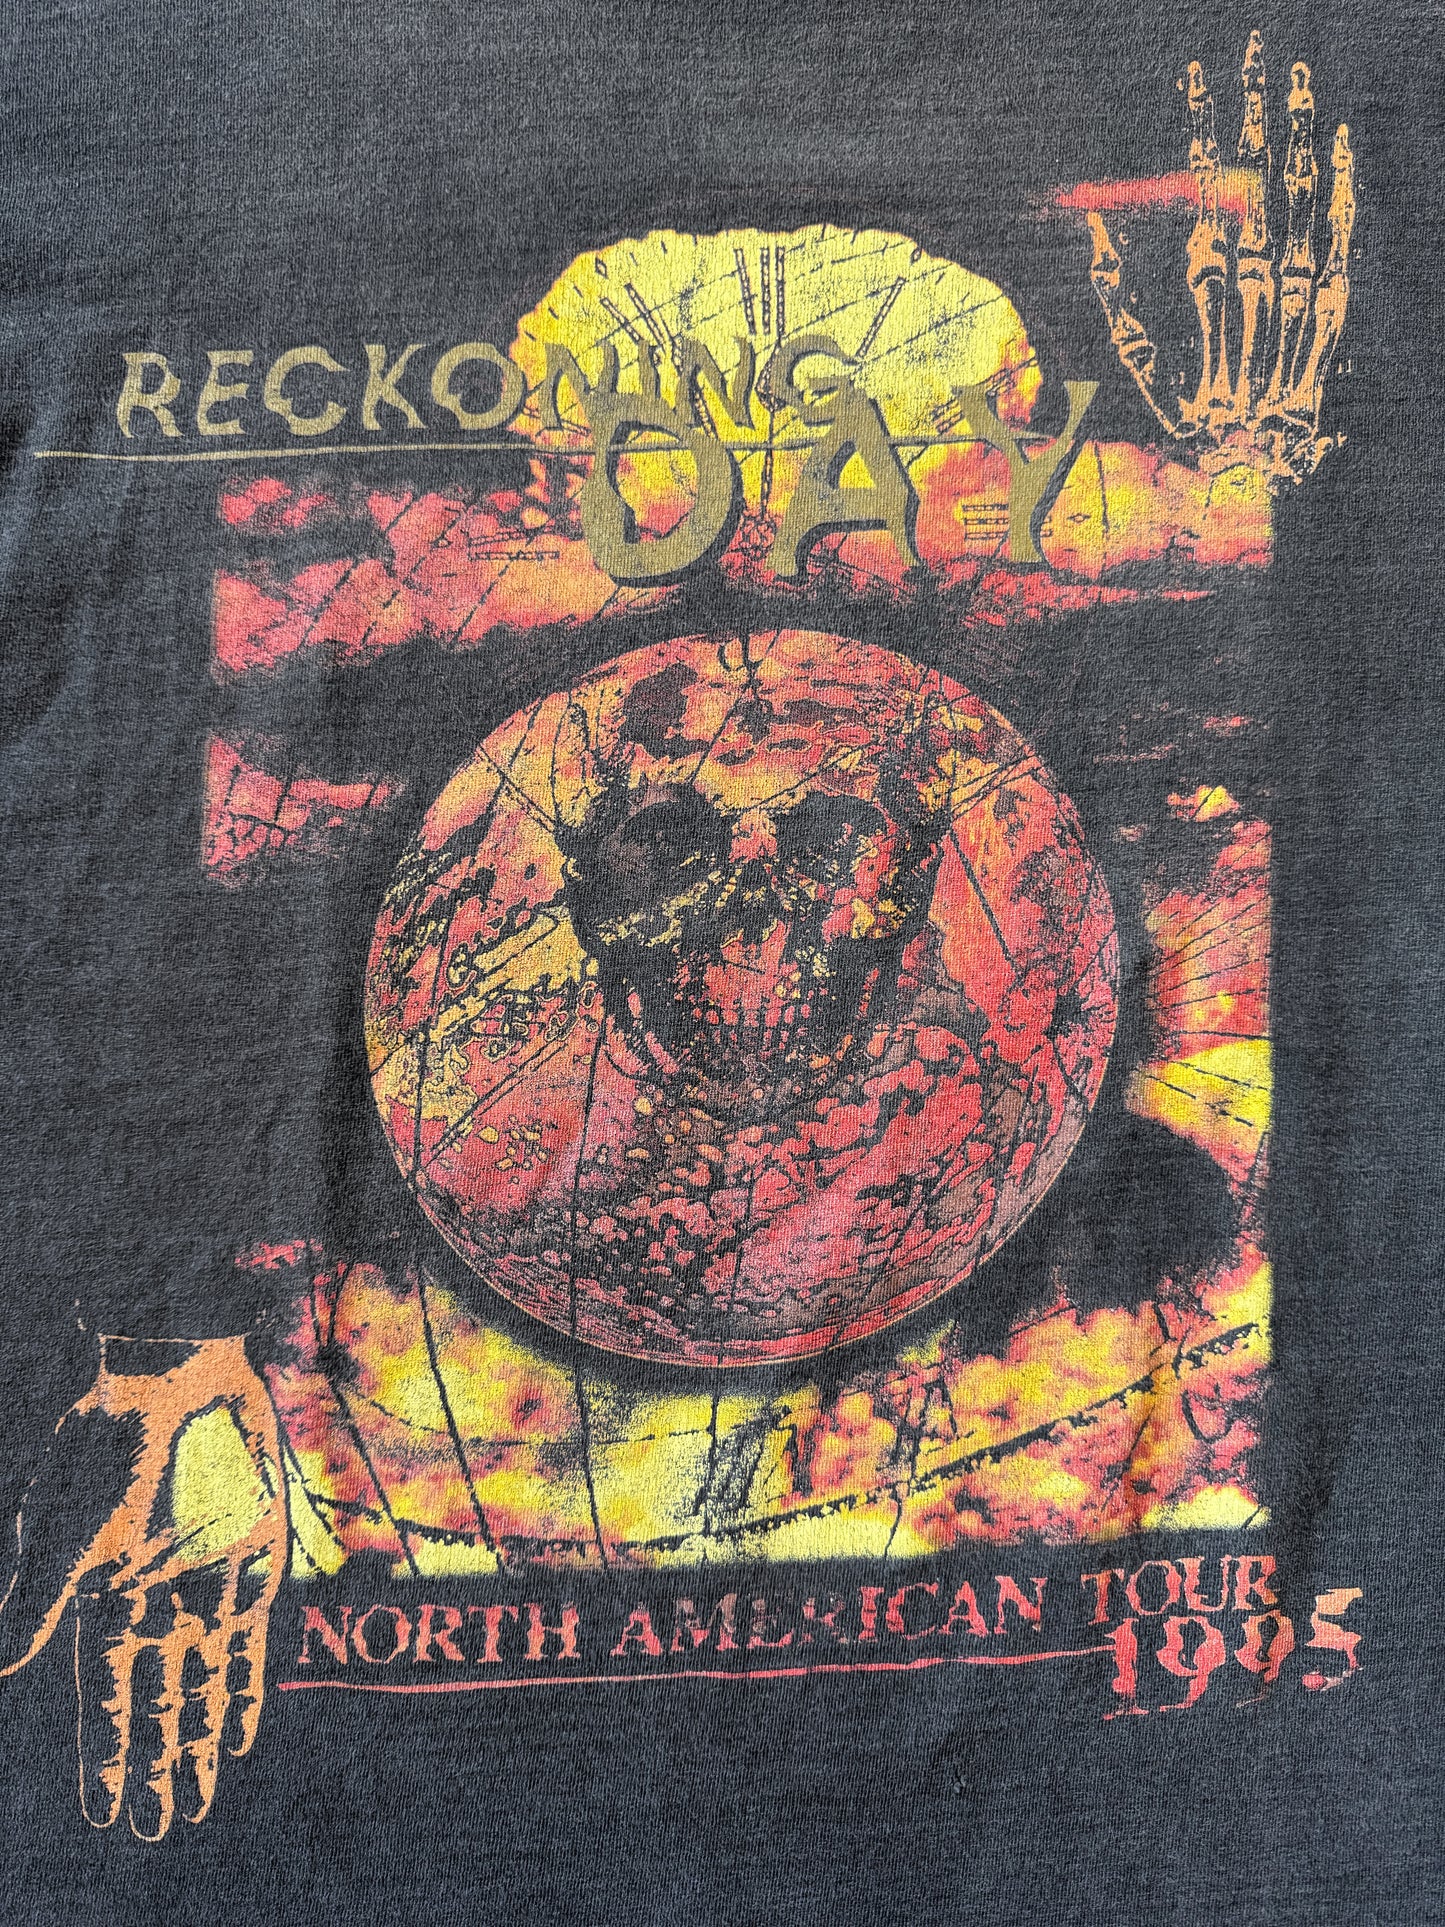 (L) 1995 Vintage Megadeth “Reckoning Day” Tour Tee